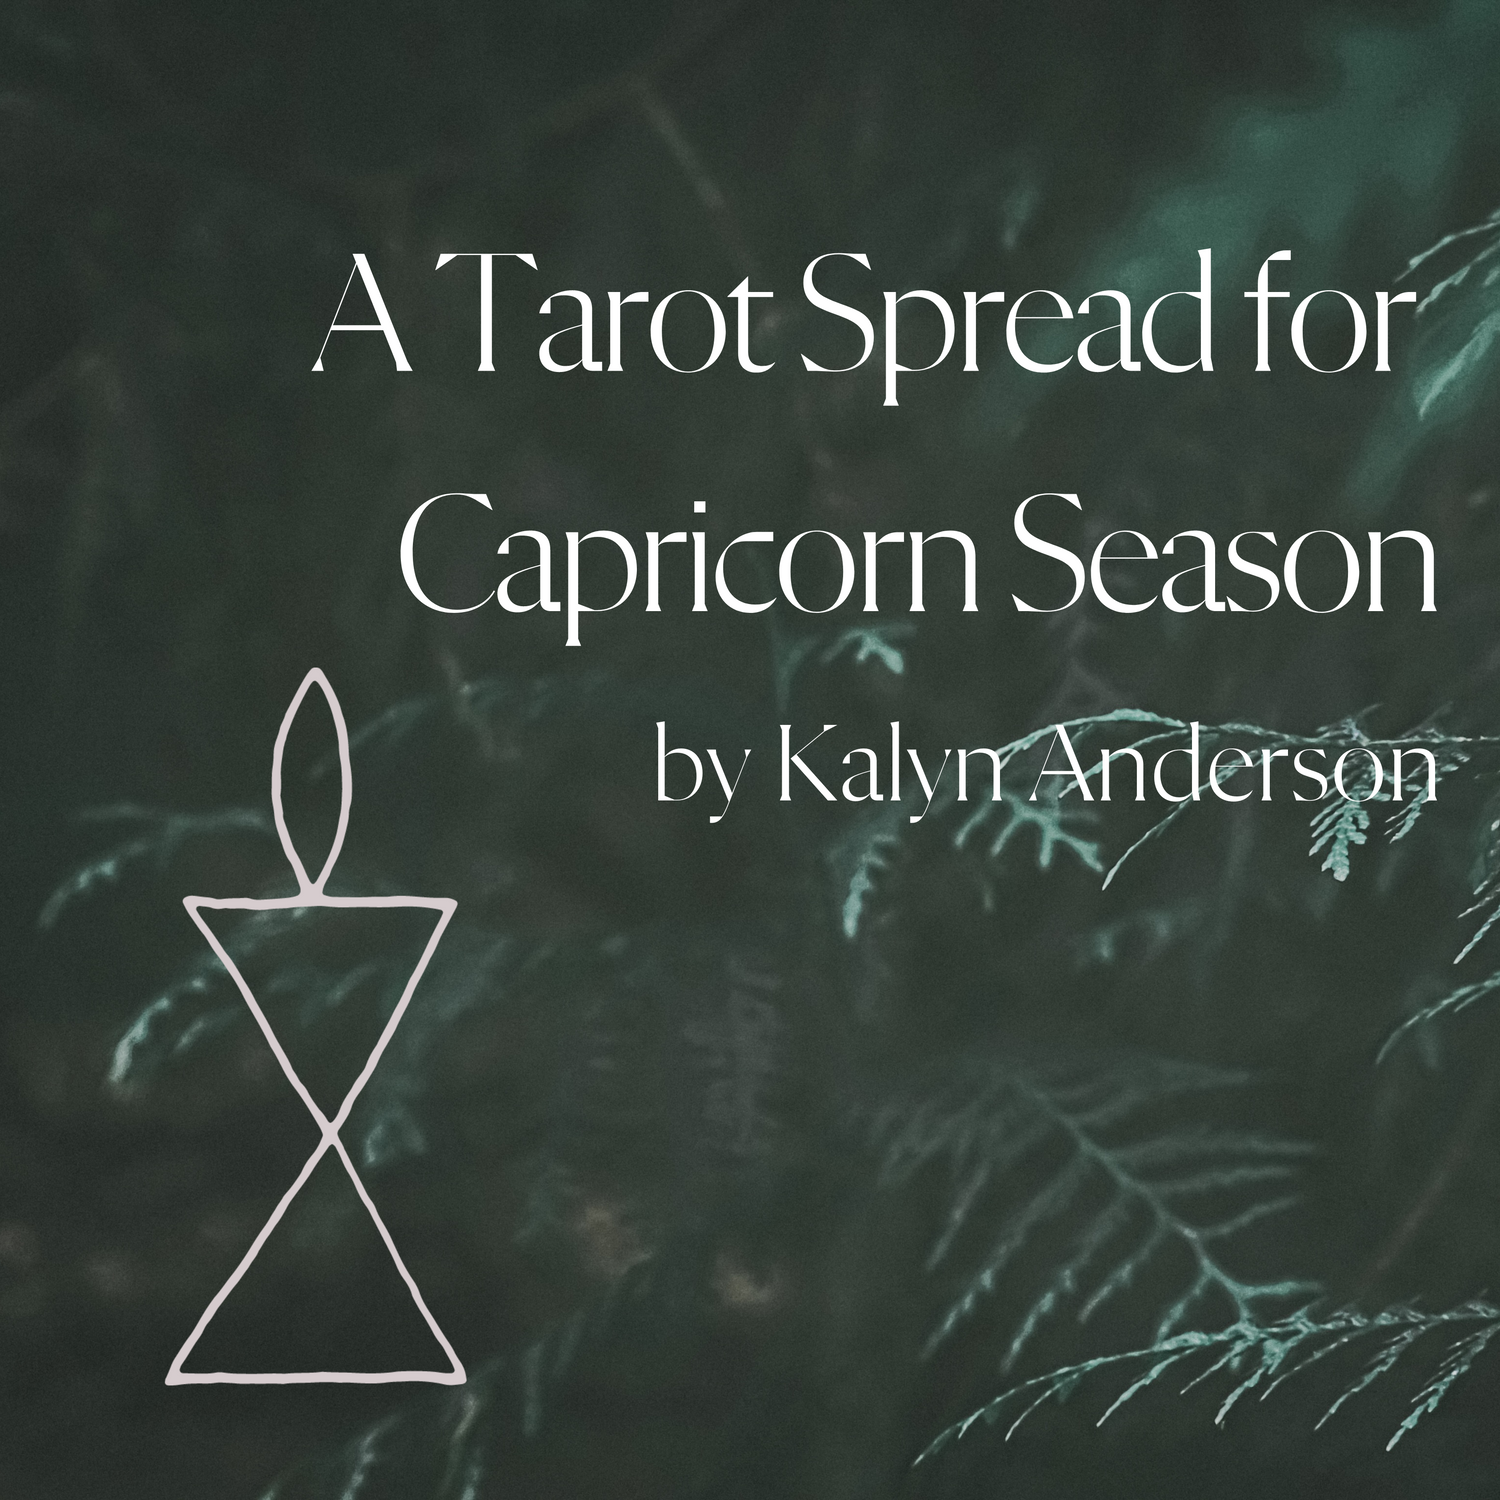 A Tarot Spread for Capricorn Season